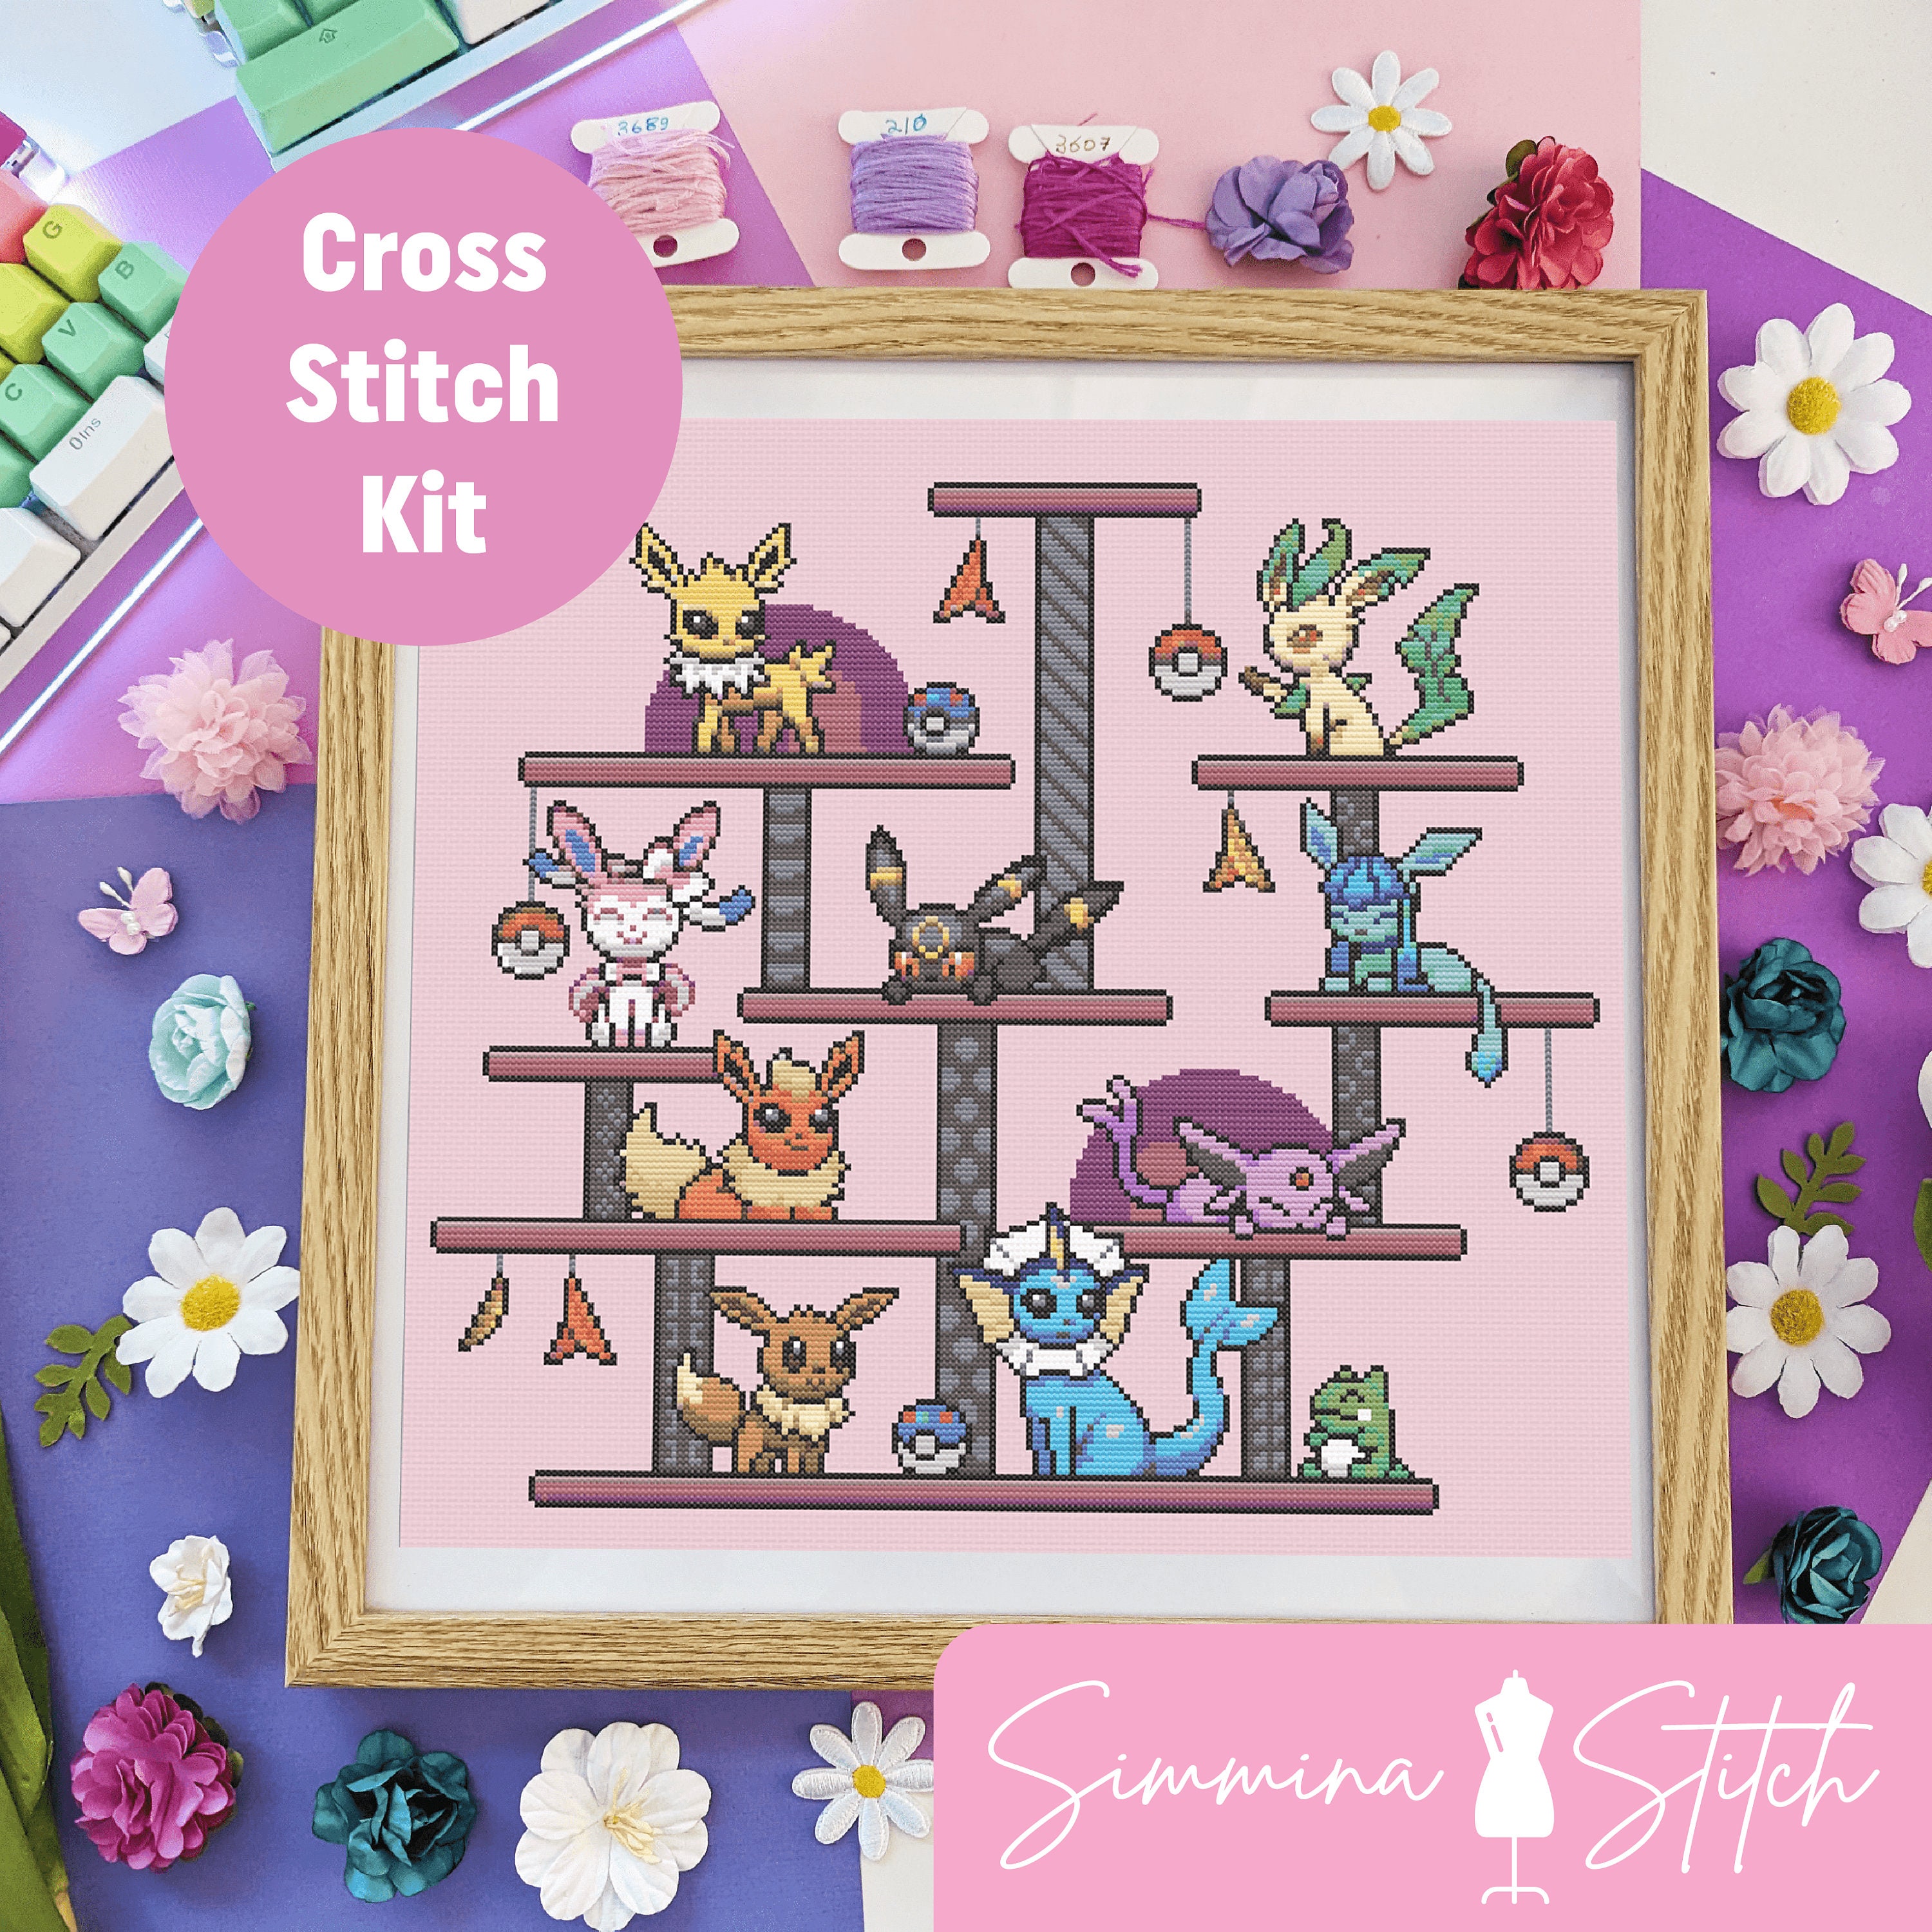 Cross stitch kit - Rainbow cross stitch kit - kids cross stitch kit - DIY beginners  cross stitch kit - Gift for Teacher - Paper Free Version